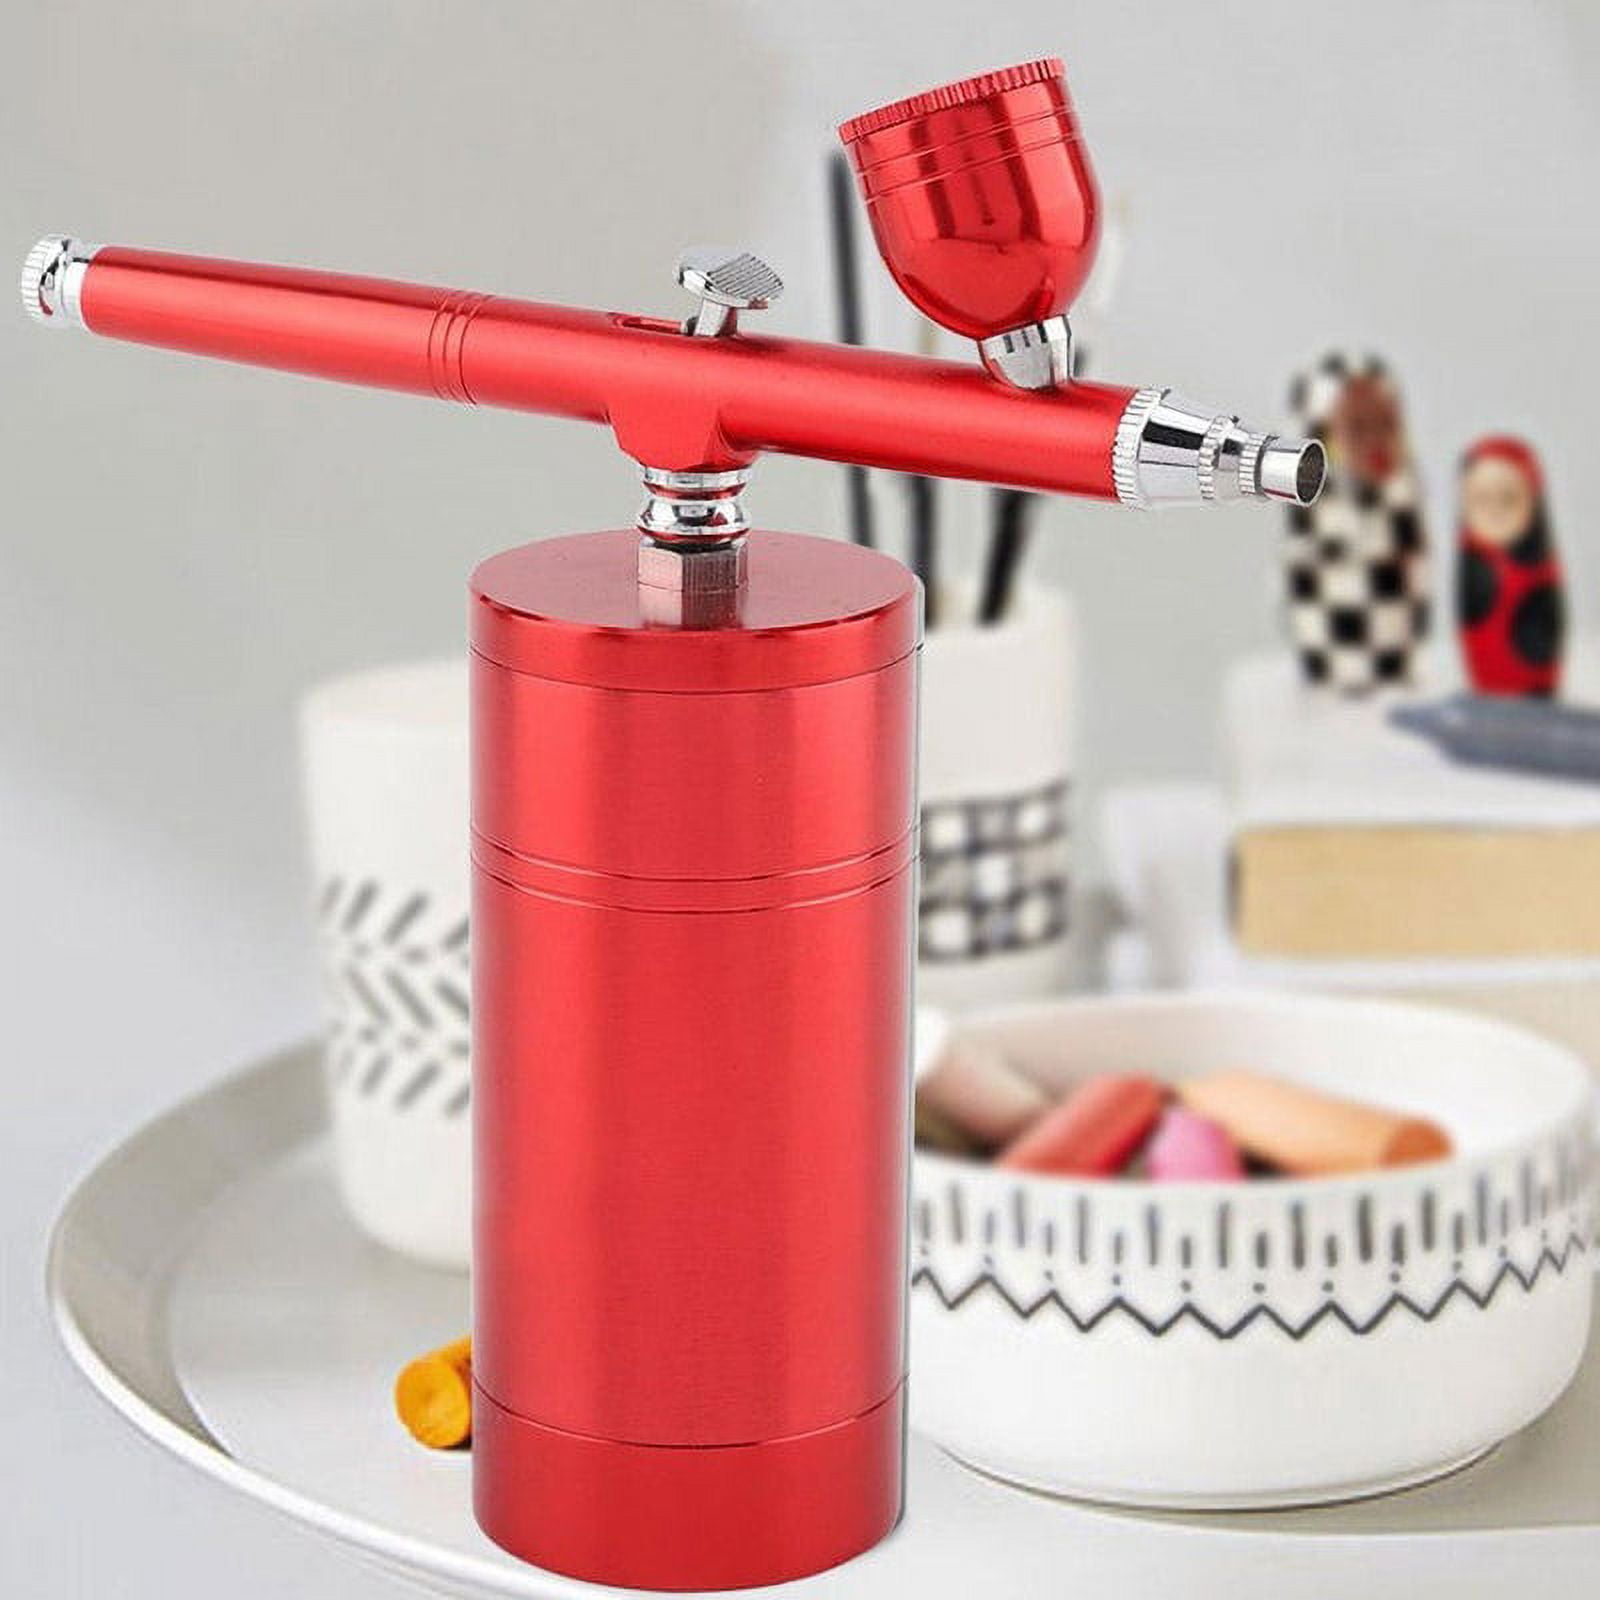 Beautygogo mini air compressor kit air-brush paint spray gun